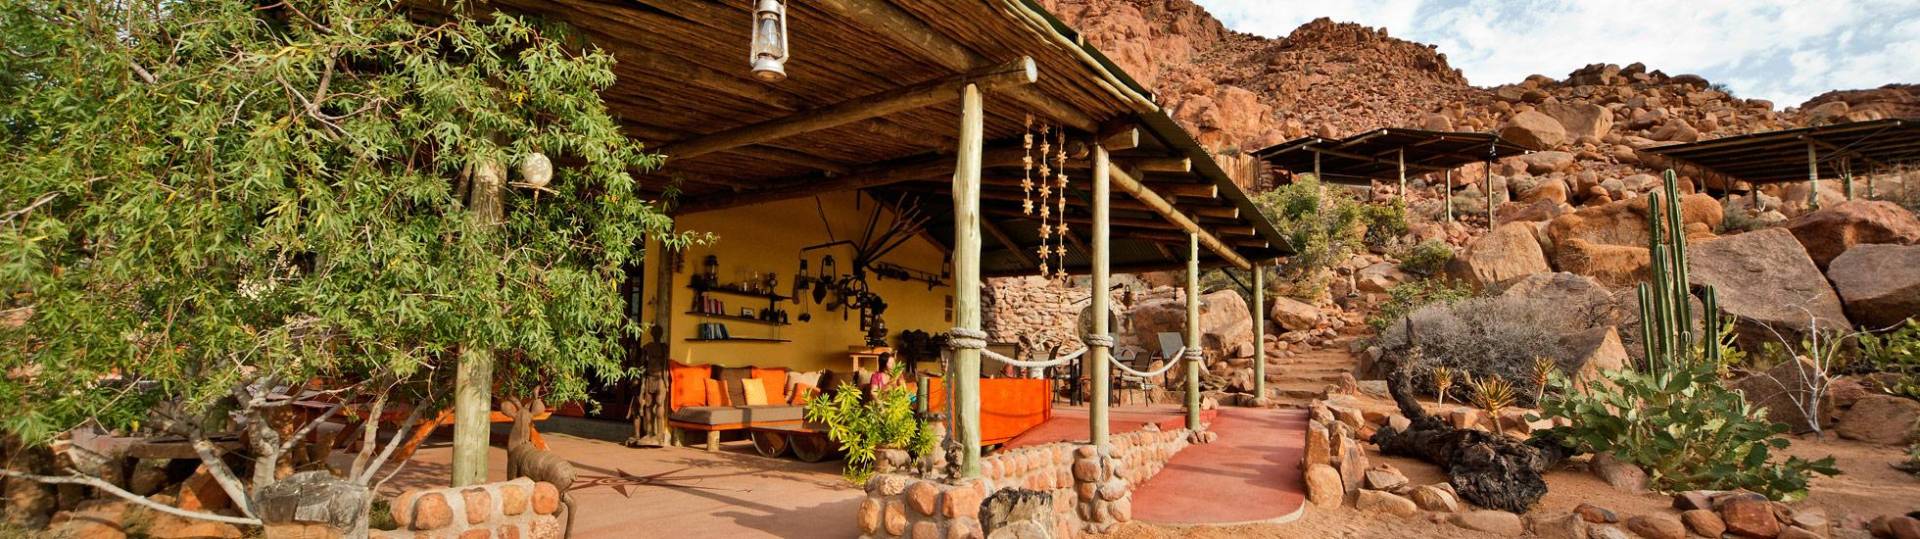 Namtib Desert Lodge reception